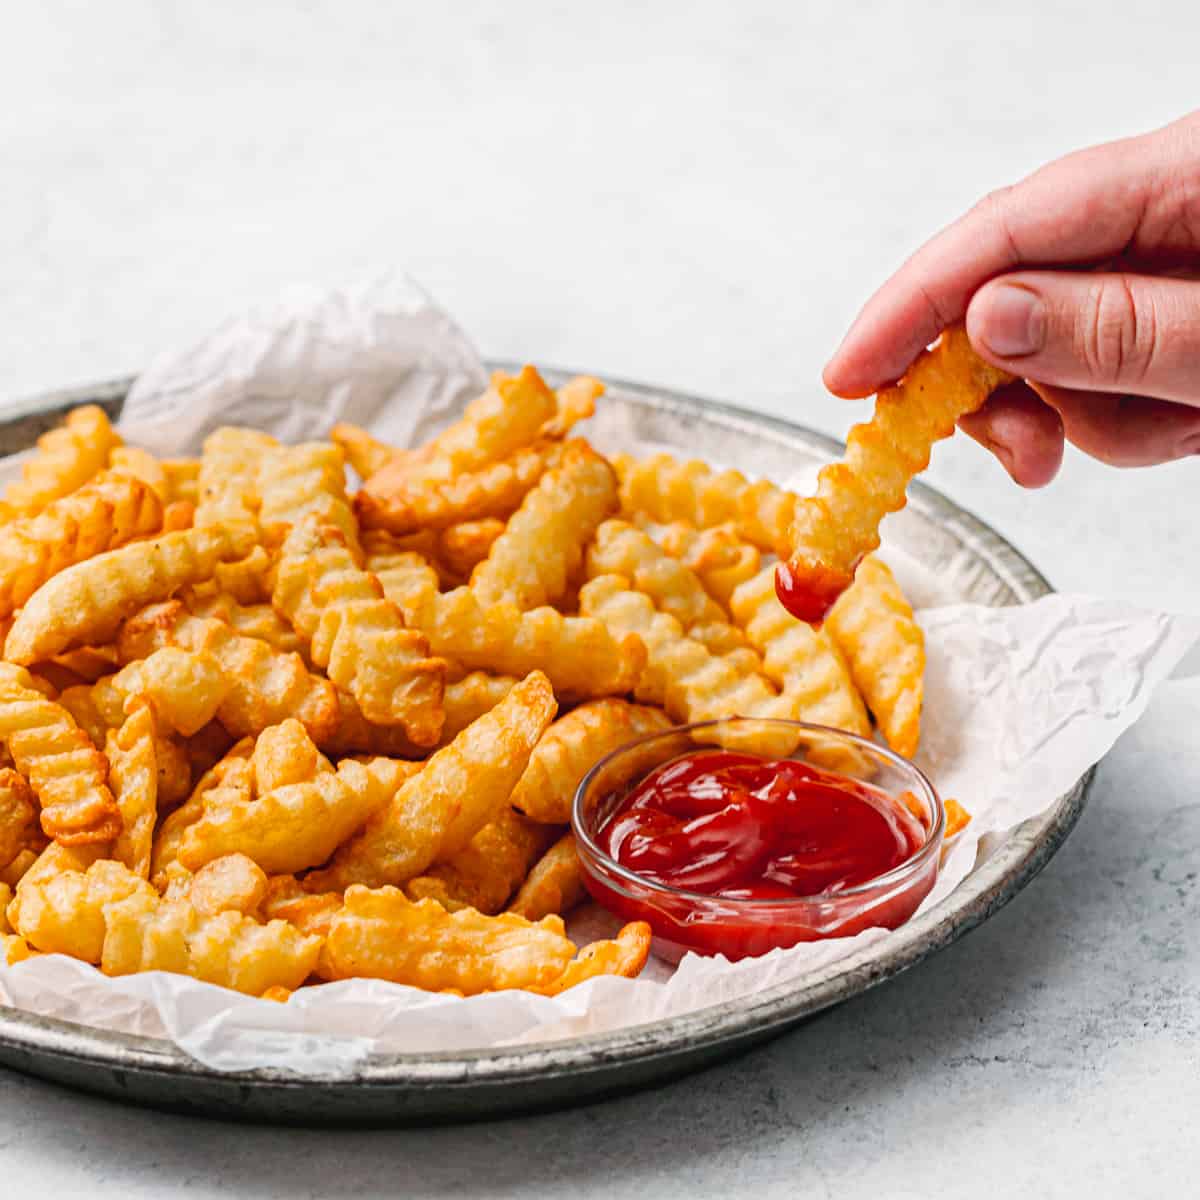 How To Make Frozen Fries Crispy